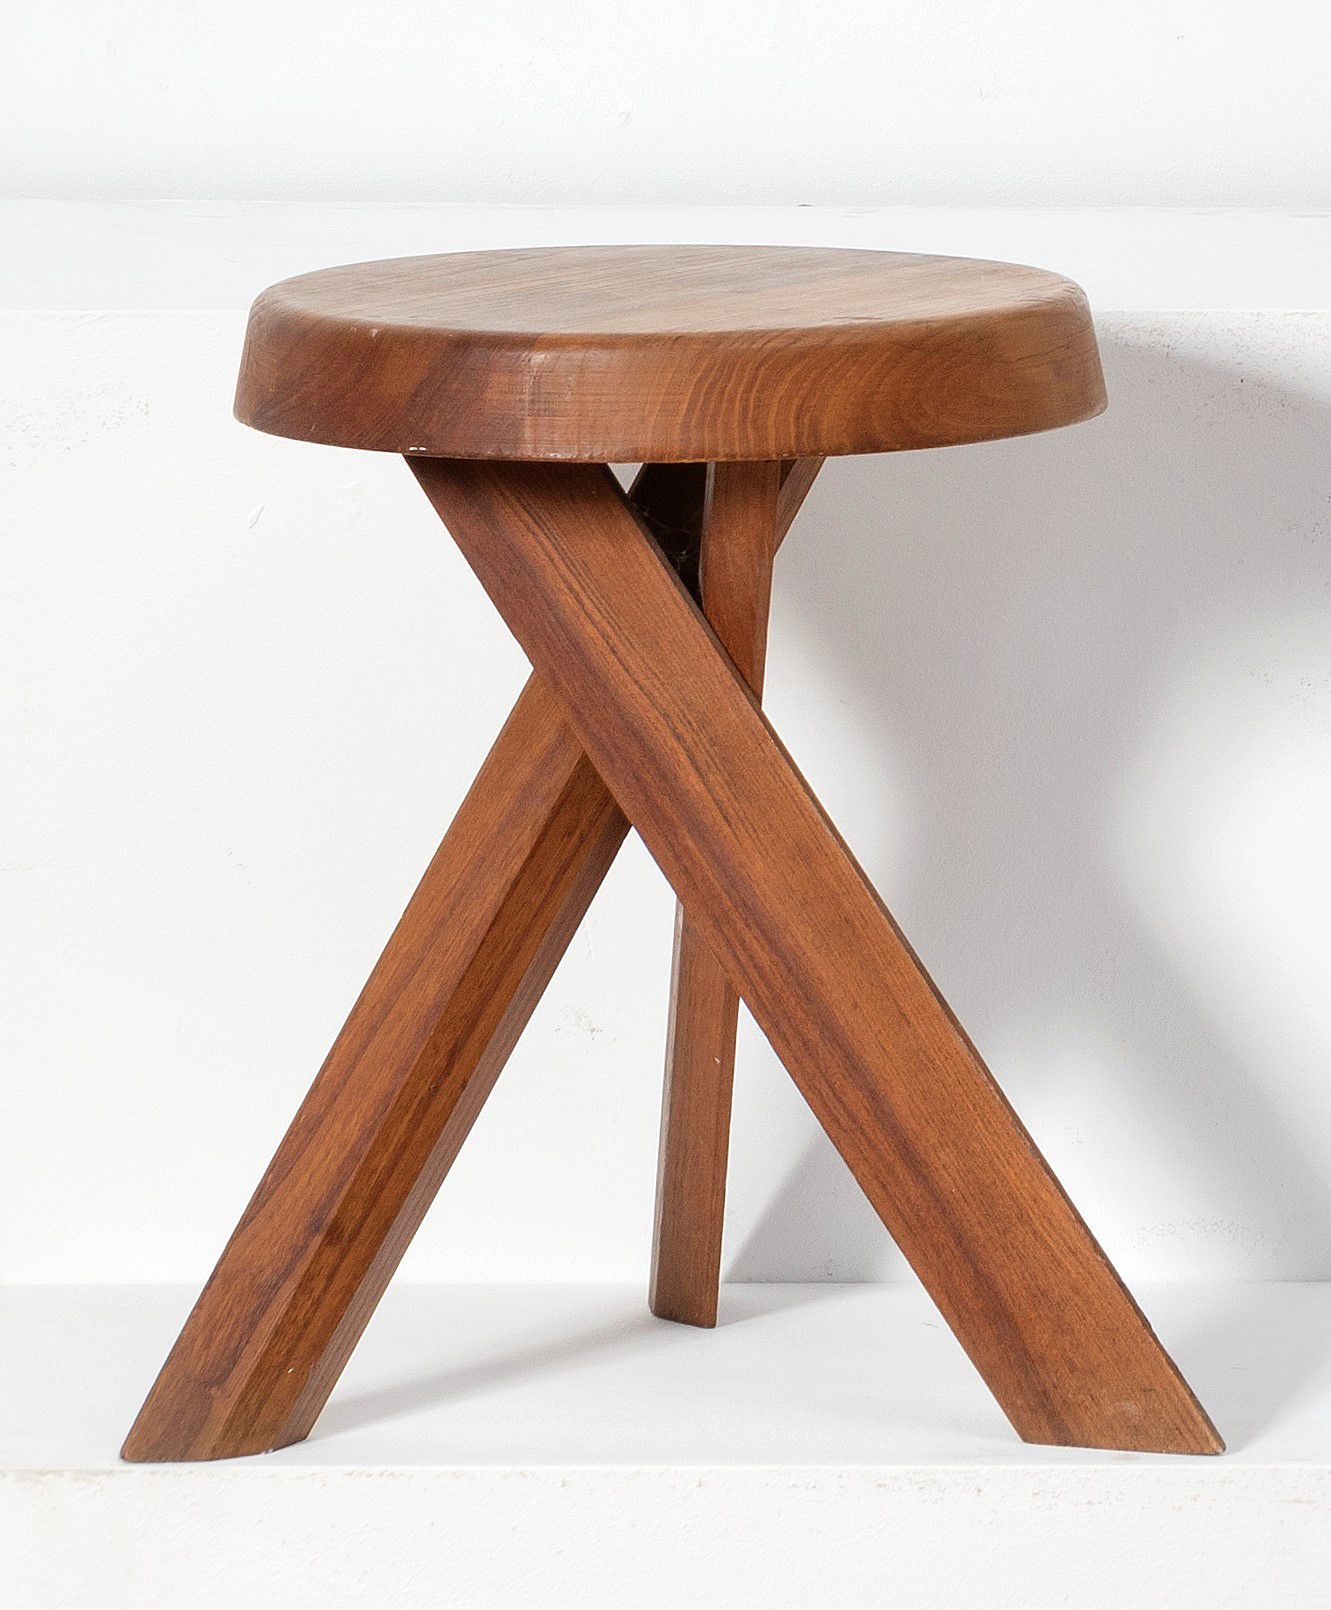 Pierre CHAPO (1927-1986) S31-A Solid elm stool.
Kruk
Massieve elm.
1984. Worksho&hellip;